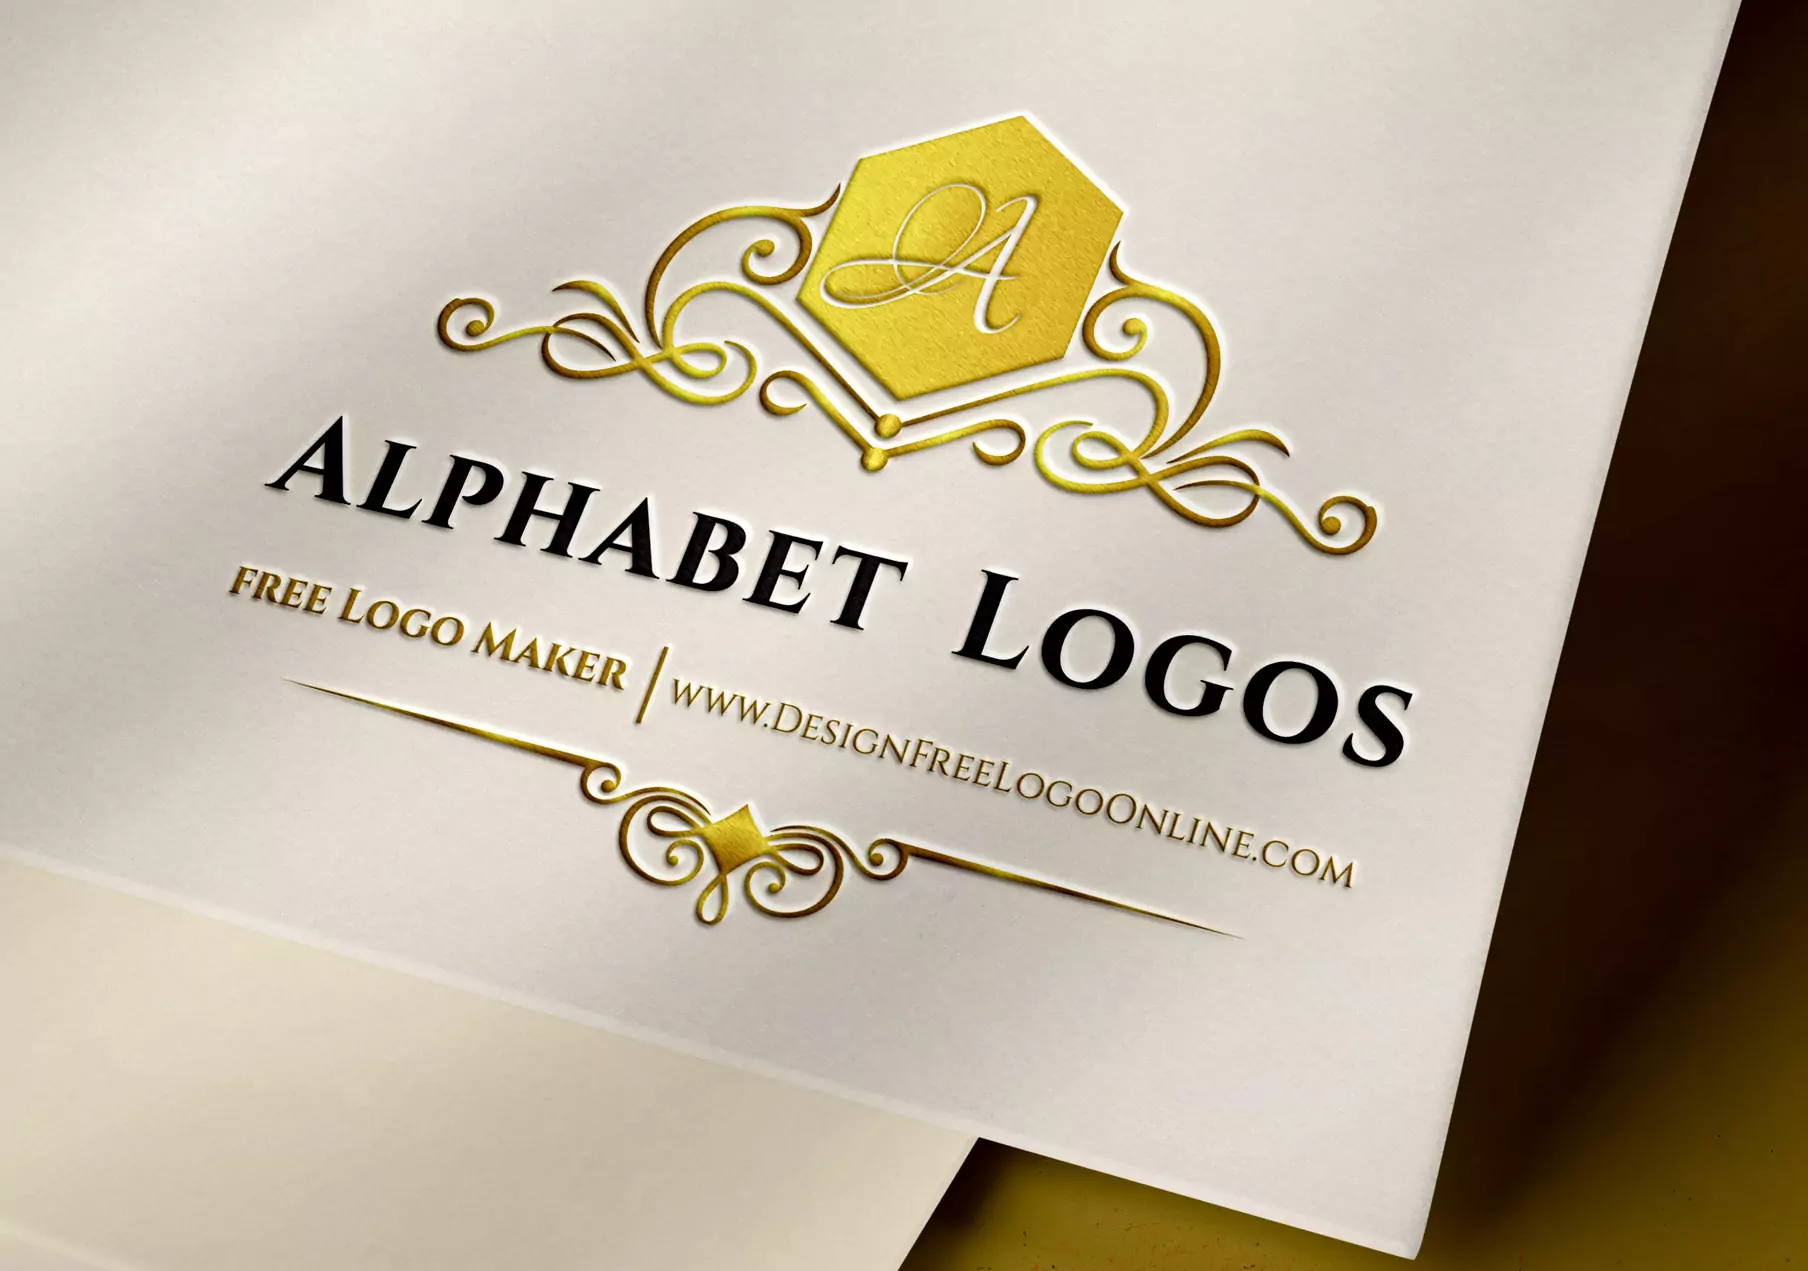 Kostenloses Alphabet Logo Maker